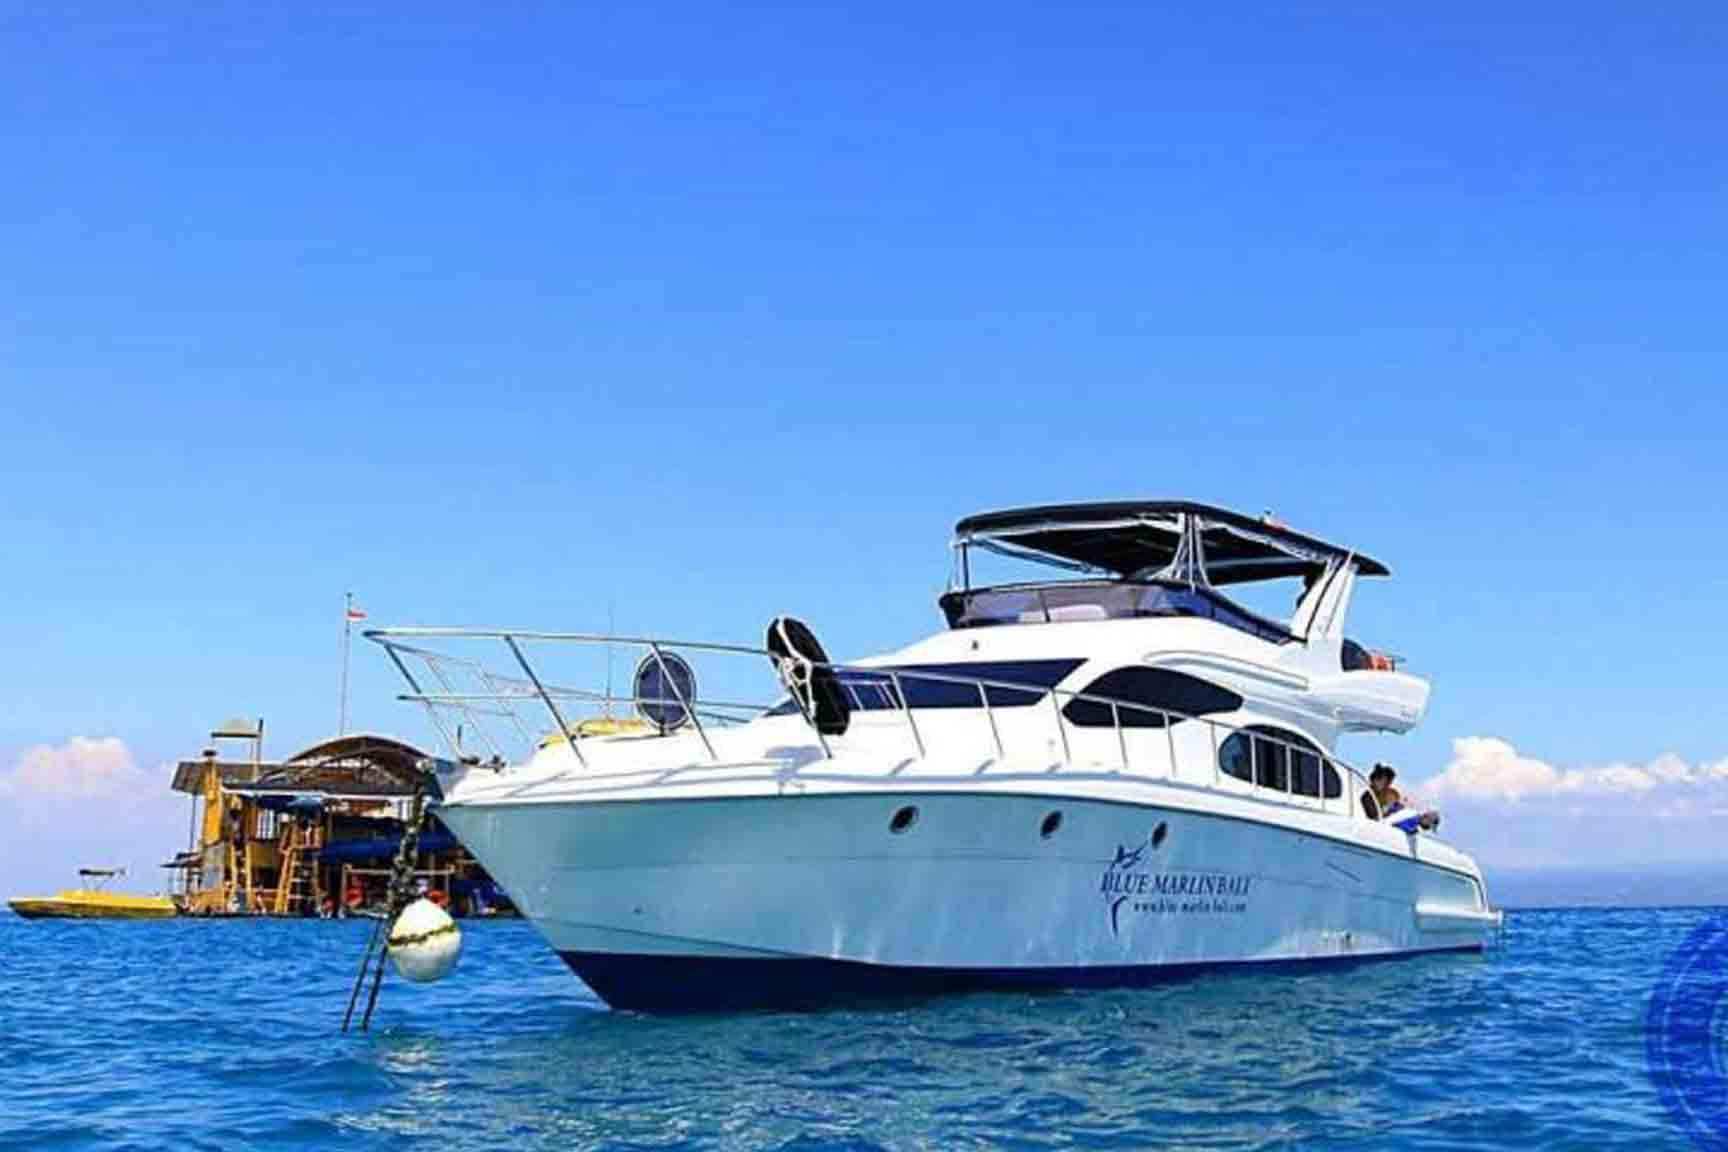 blue marlin yacht sales